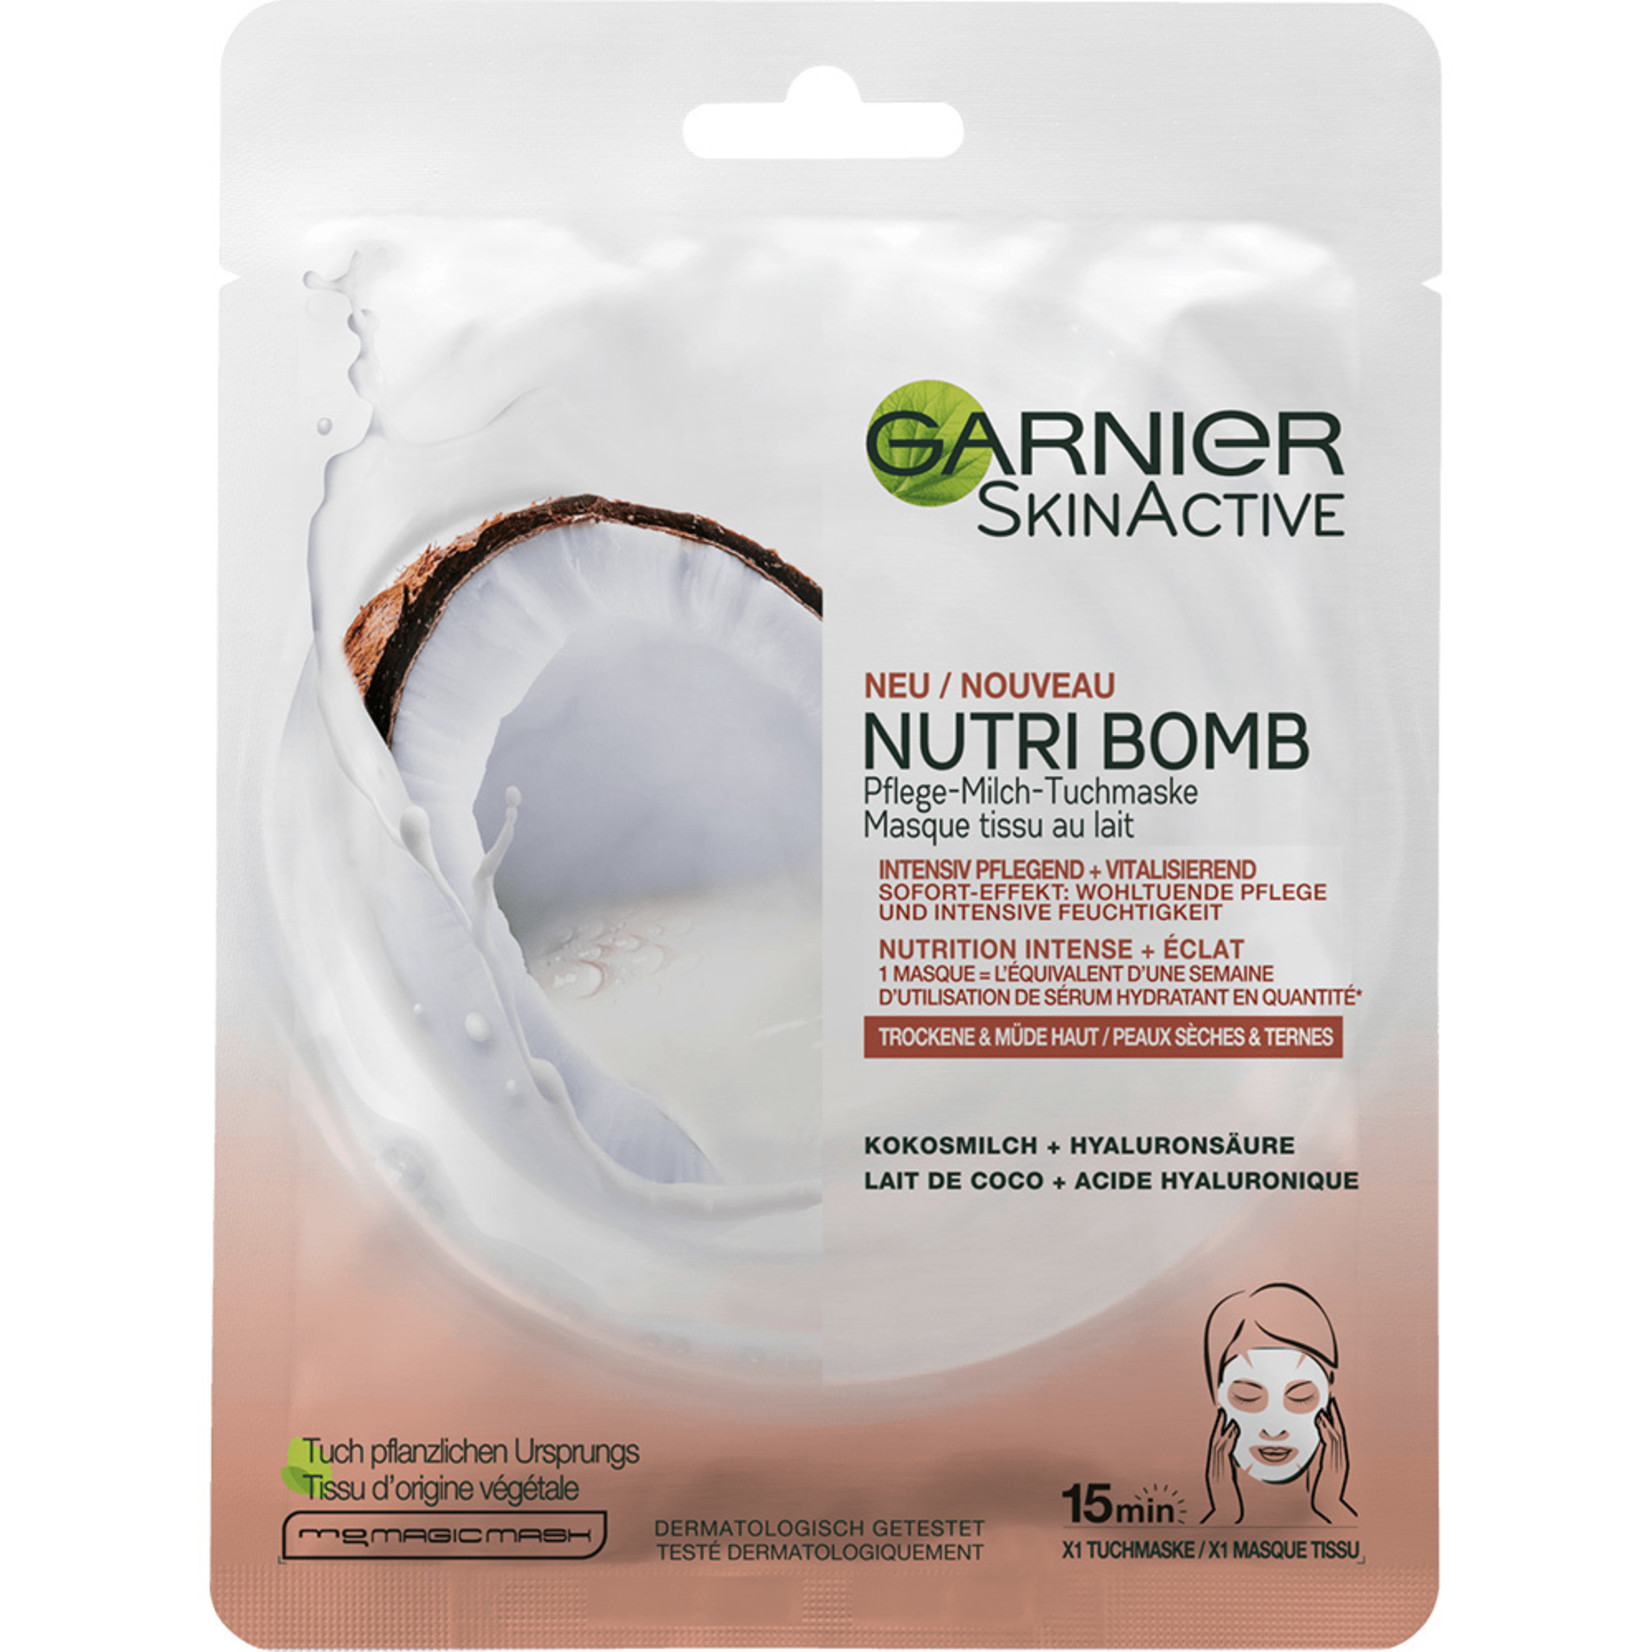 Garnier SkinActive Nutri Bomb Pflege-Milch-Tuchmaske Kokosmilch